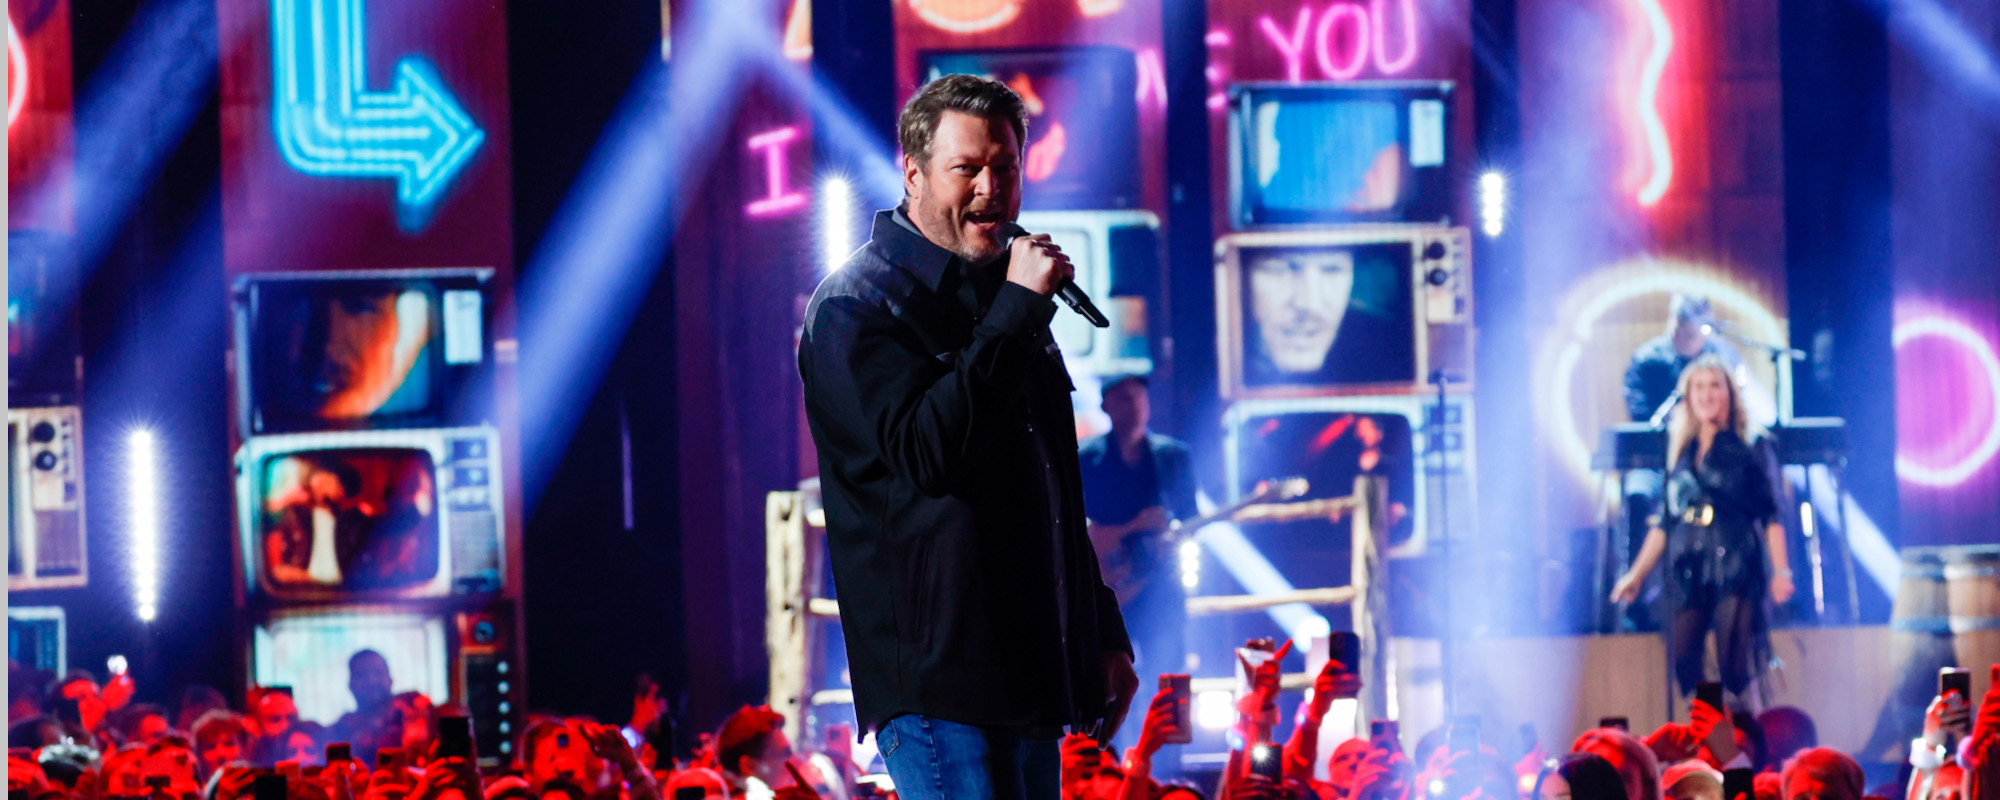 Blake Shelton Turns ‘CMT Music Awards’ Into Full-On Honky Tonk with “No Body”